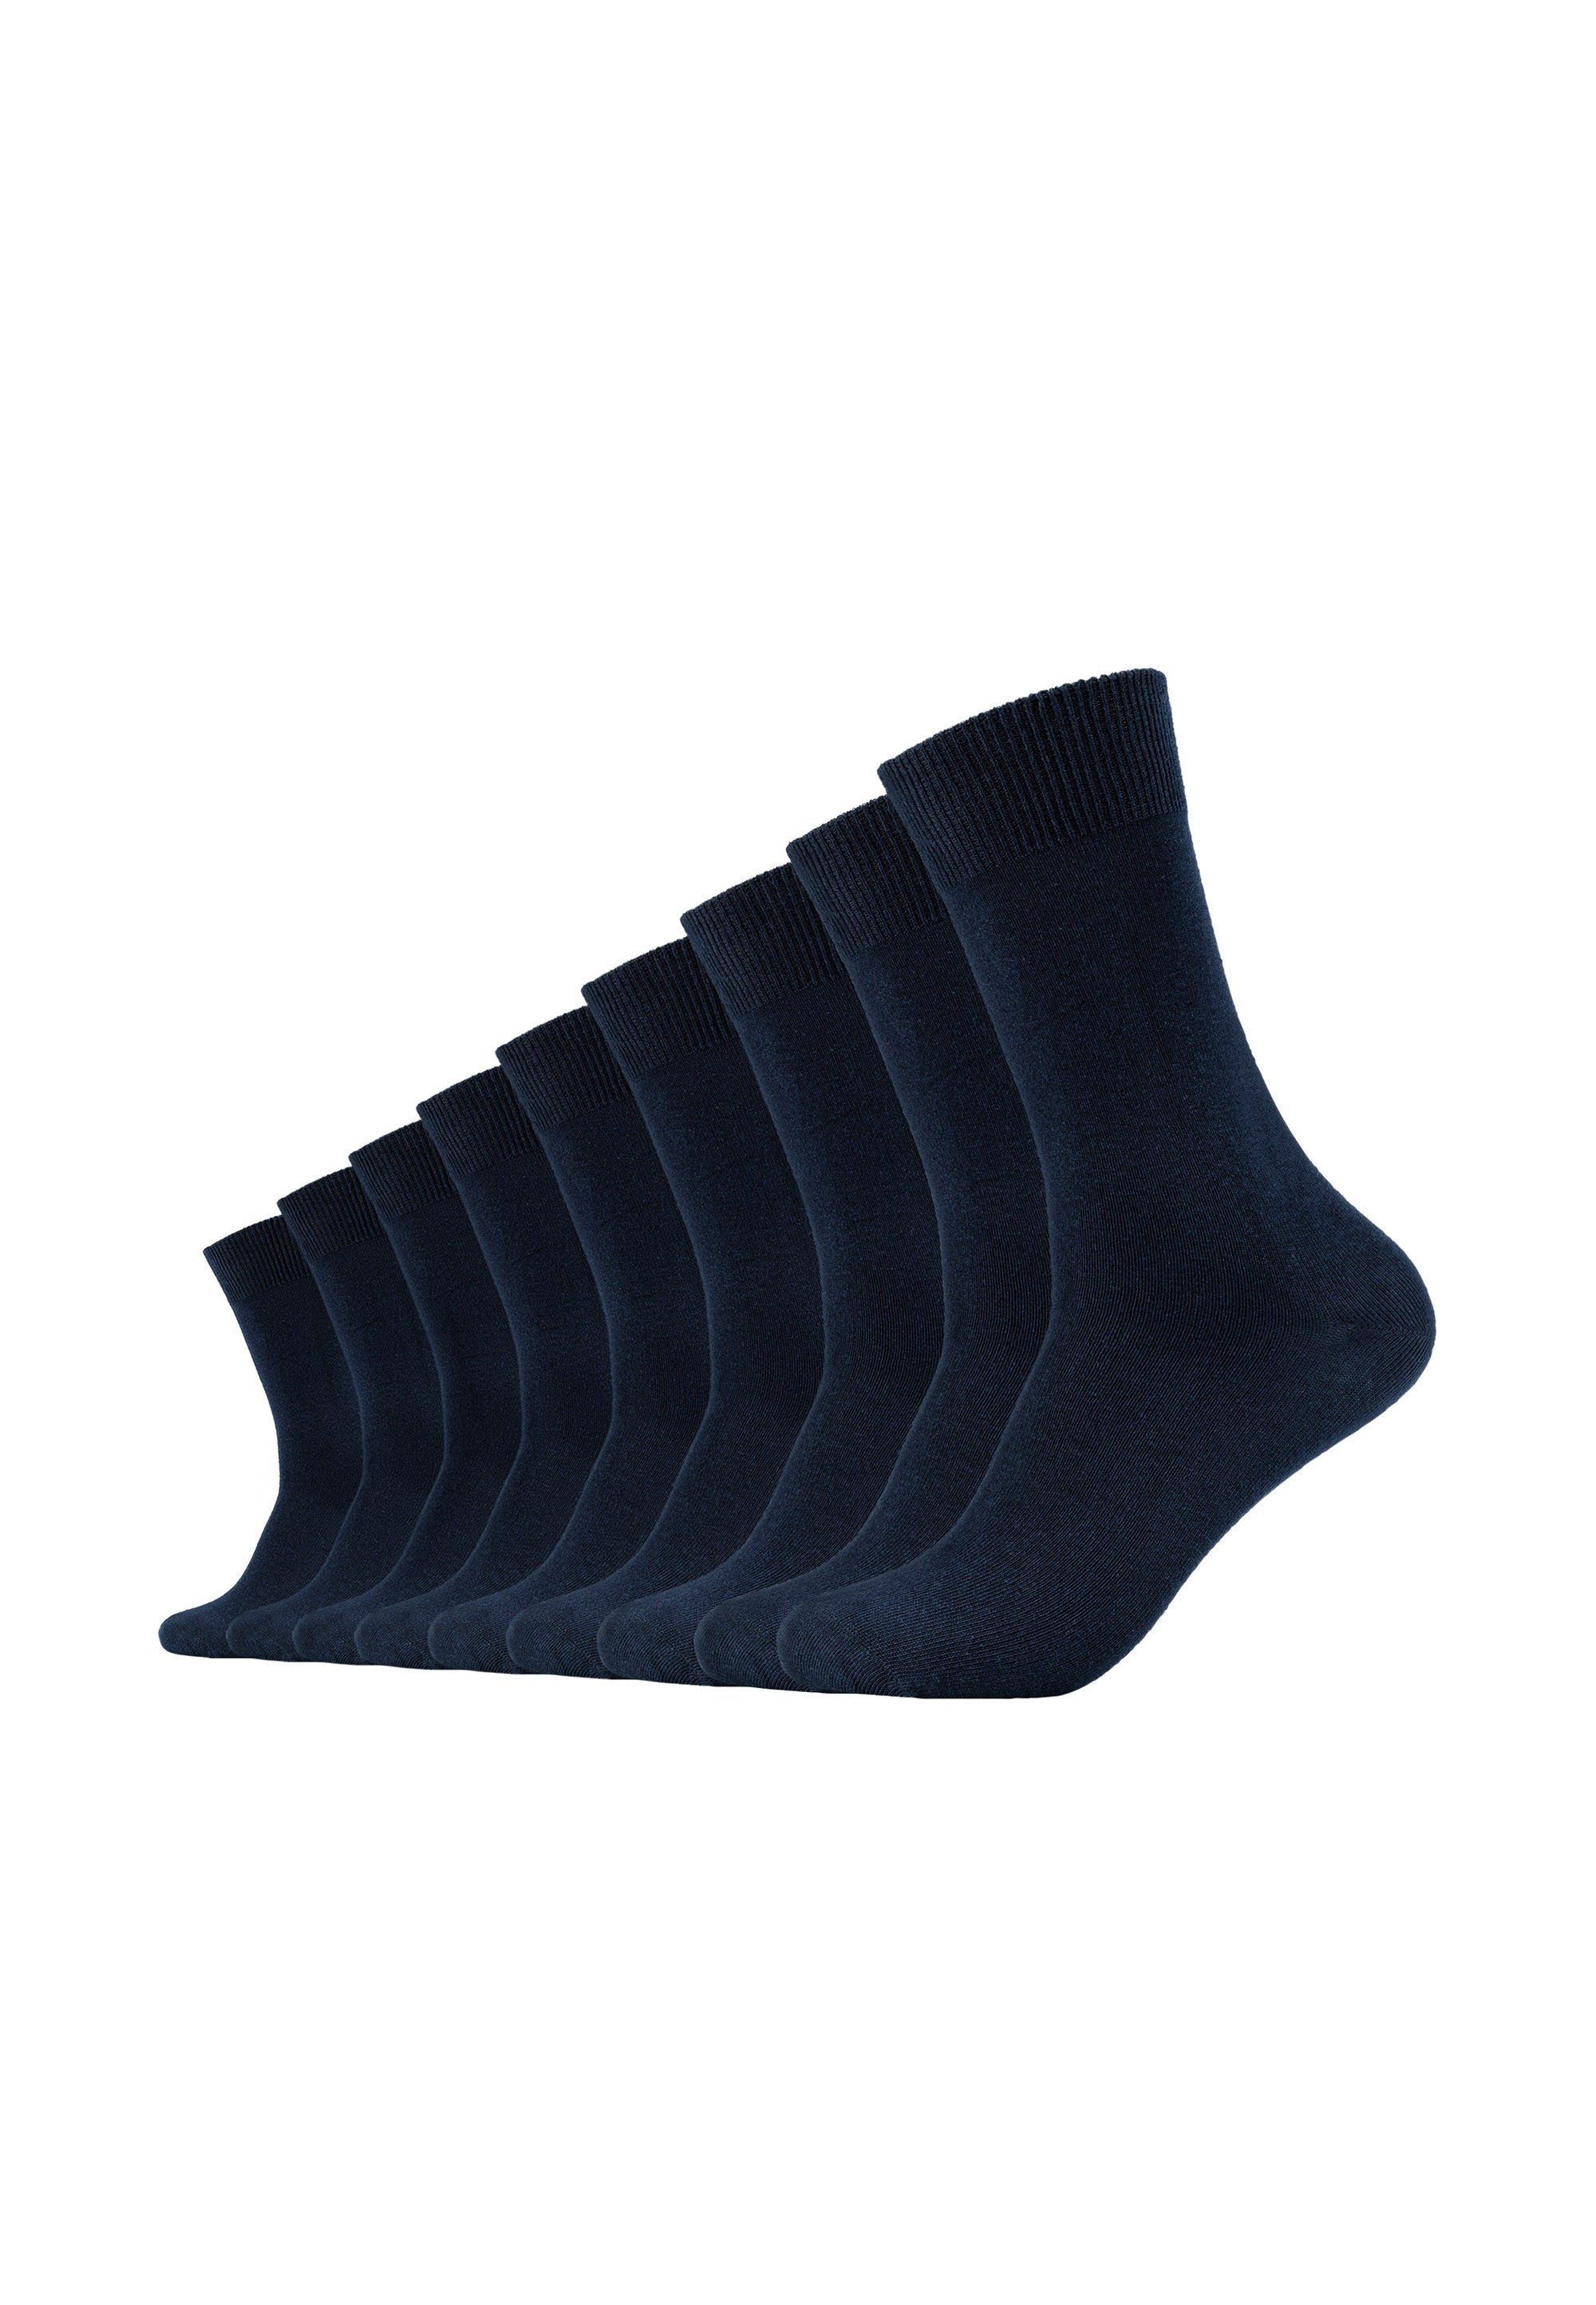 Socken comfort mit 9er Pack – ONSKINERY Bio-Baumwolle